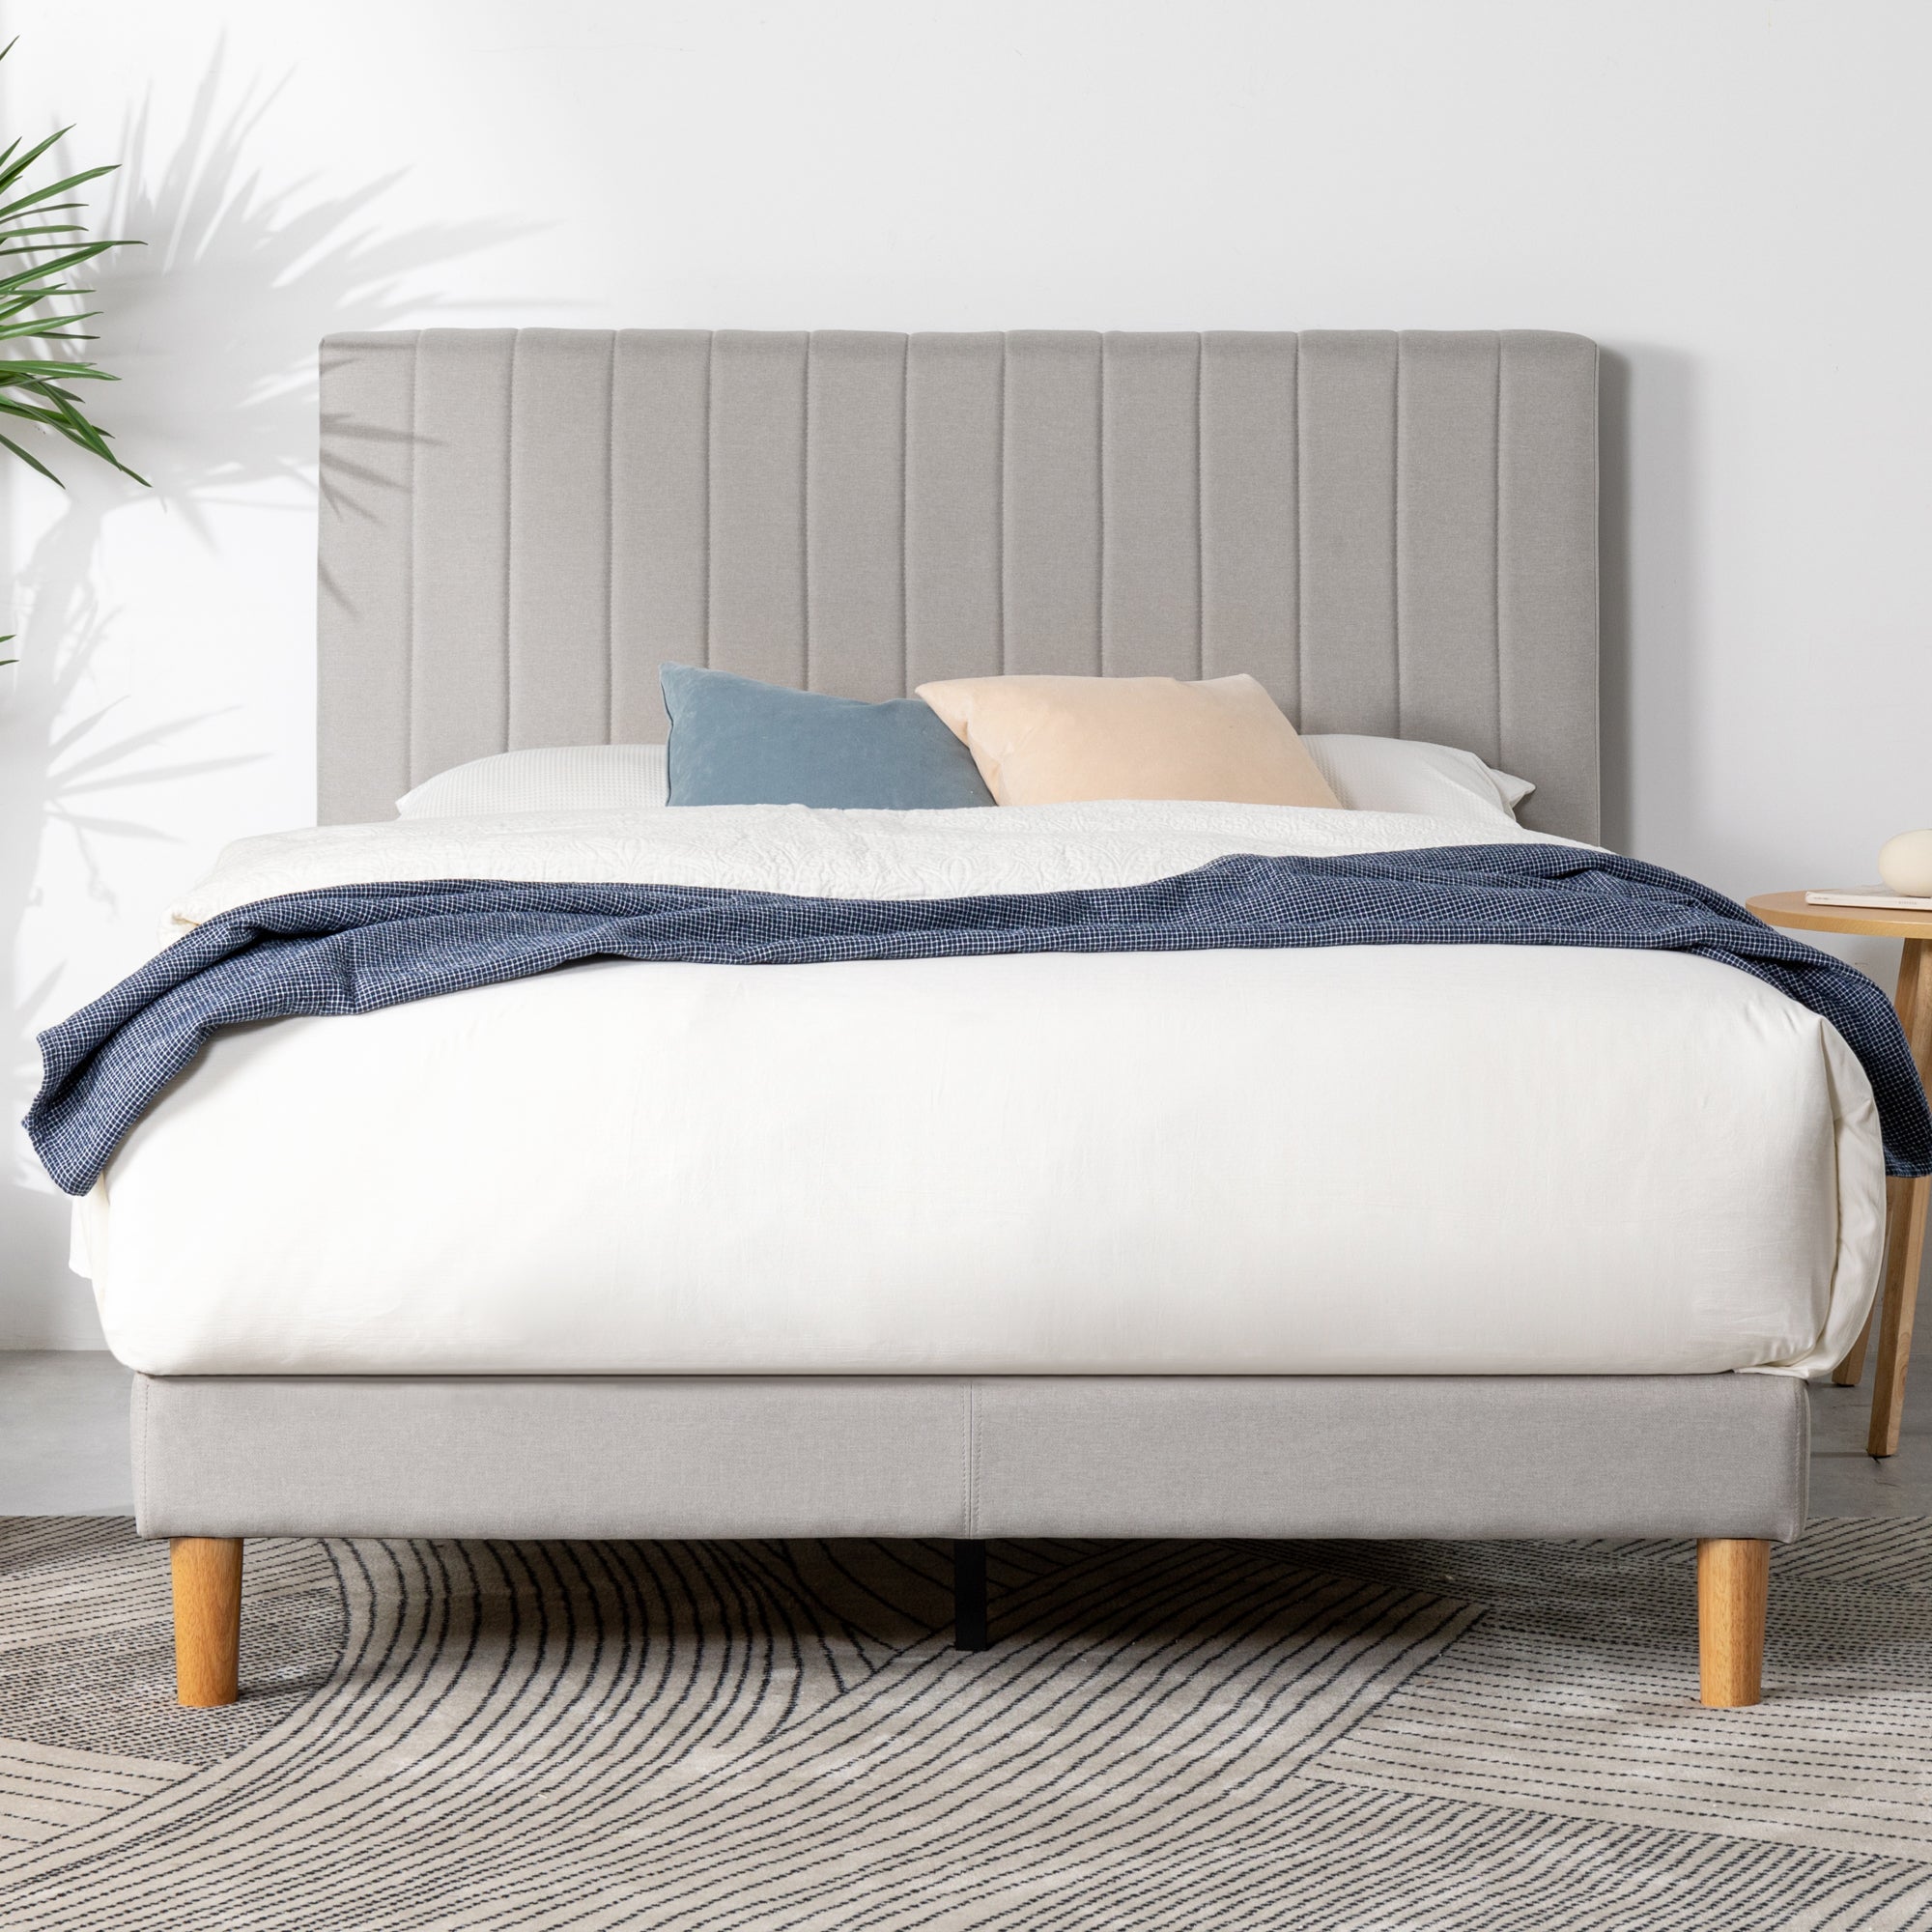 Zinus Debi Upholstered Fabric Platform Bed Frame Tall Headboard - Light Grey Queen Size